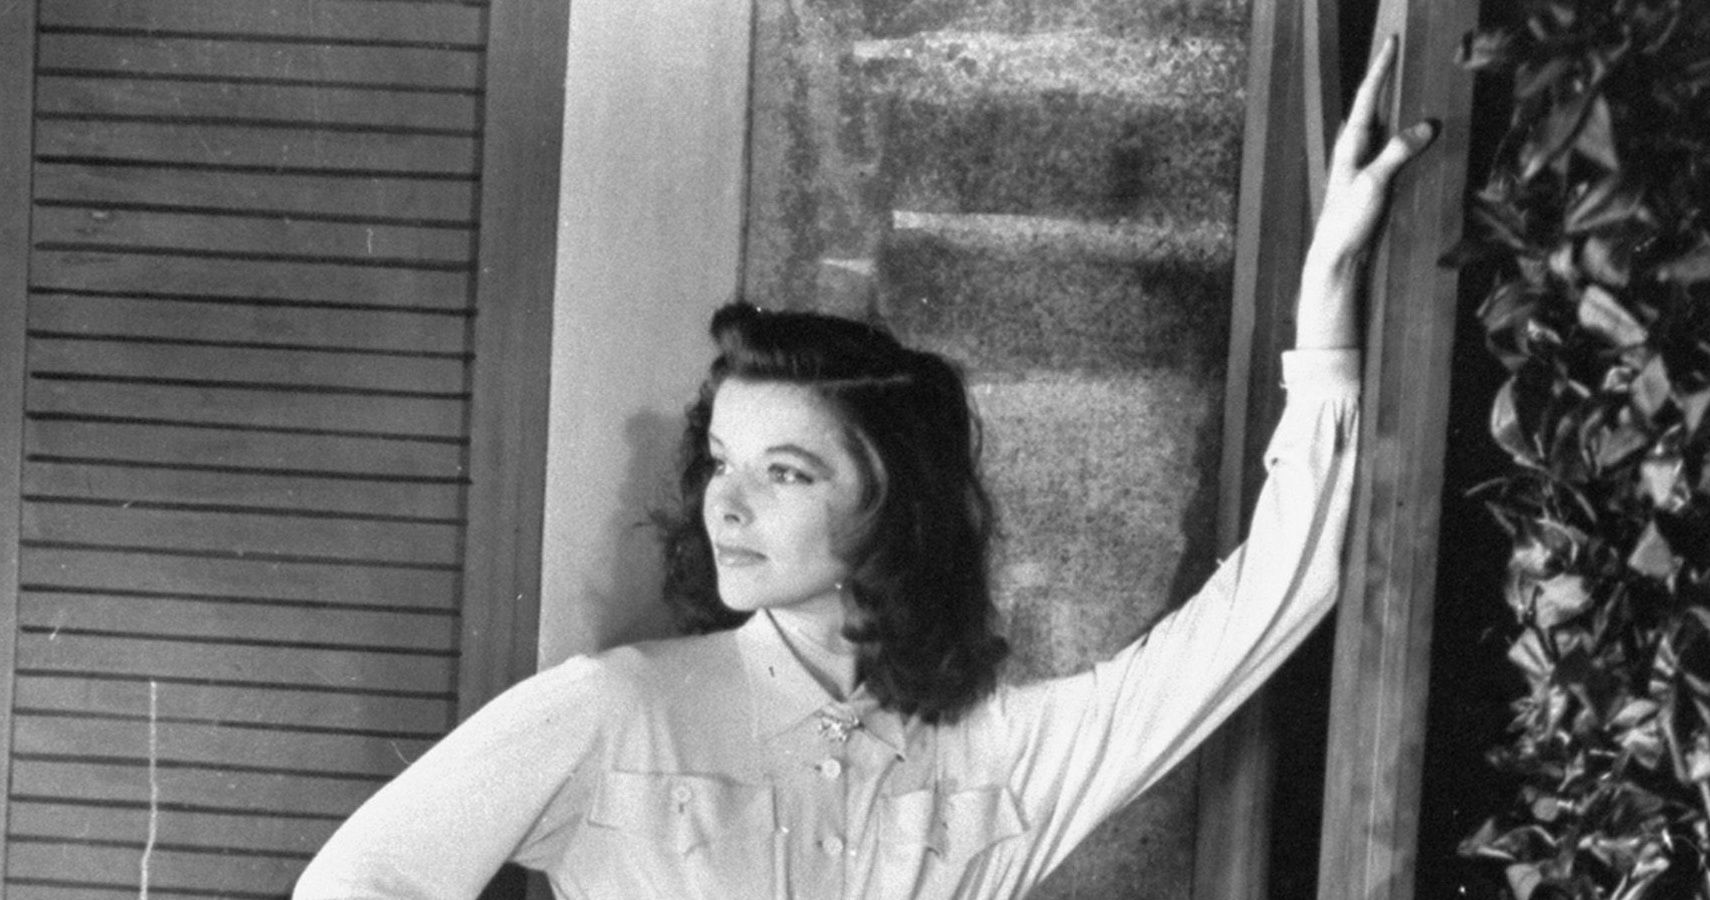 Katherine Hepburn 10 Most Iconic Roles Ranked (According to IMBD)